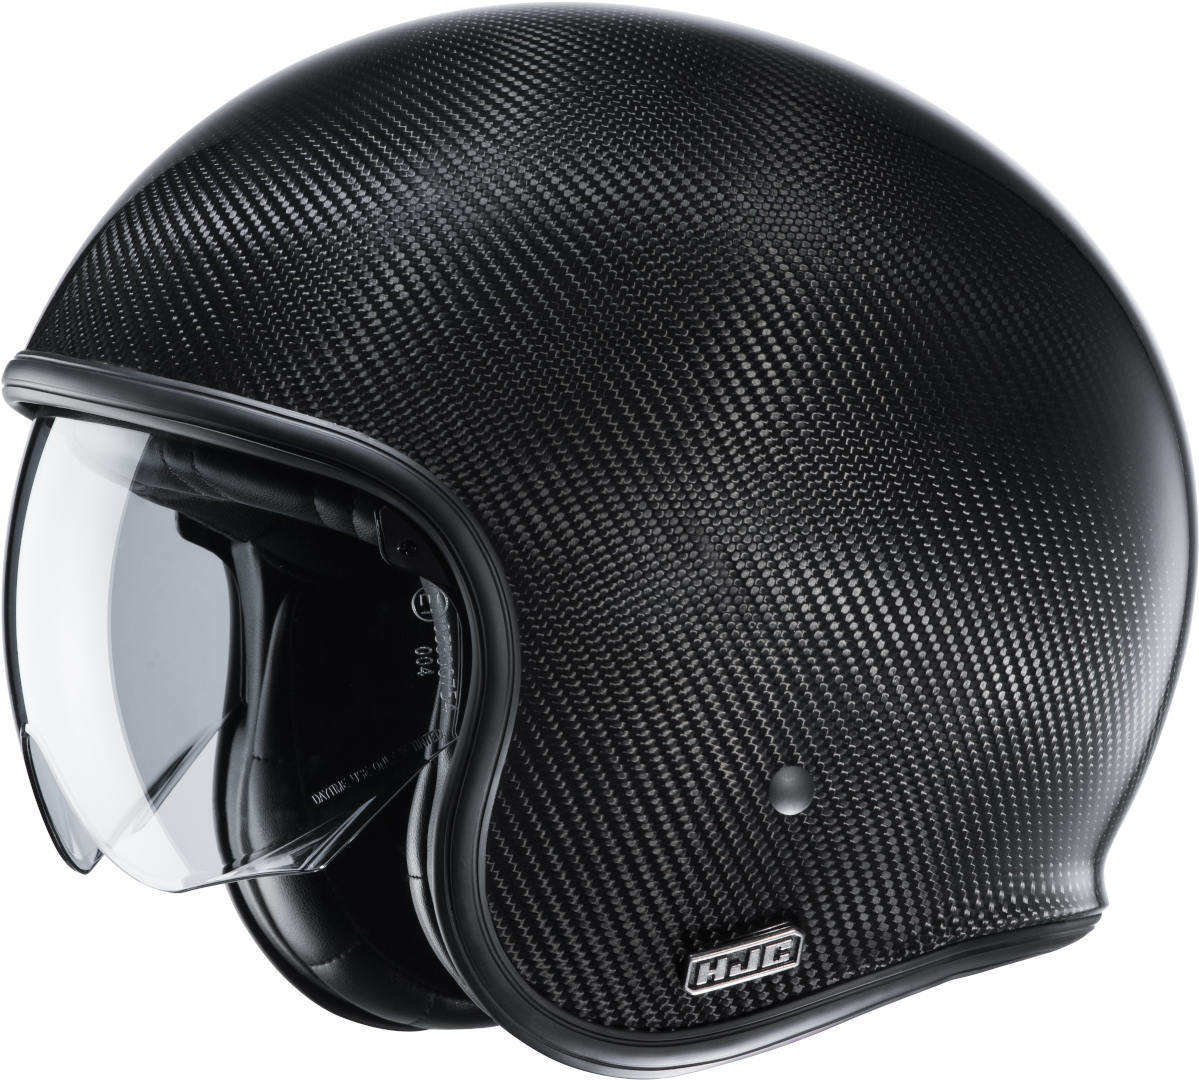 Шлем HJC V30 Carbon реактивный, черный реактивный шлем v30 hjc черный мэтт